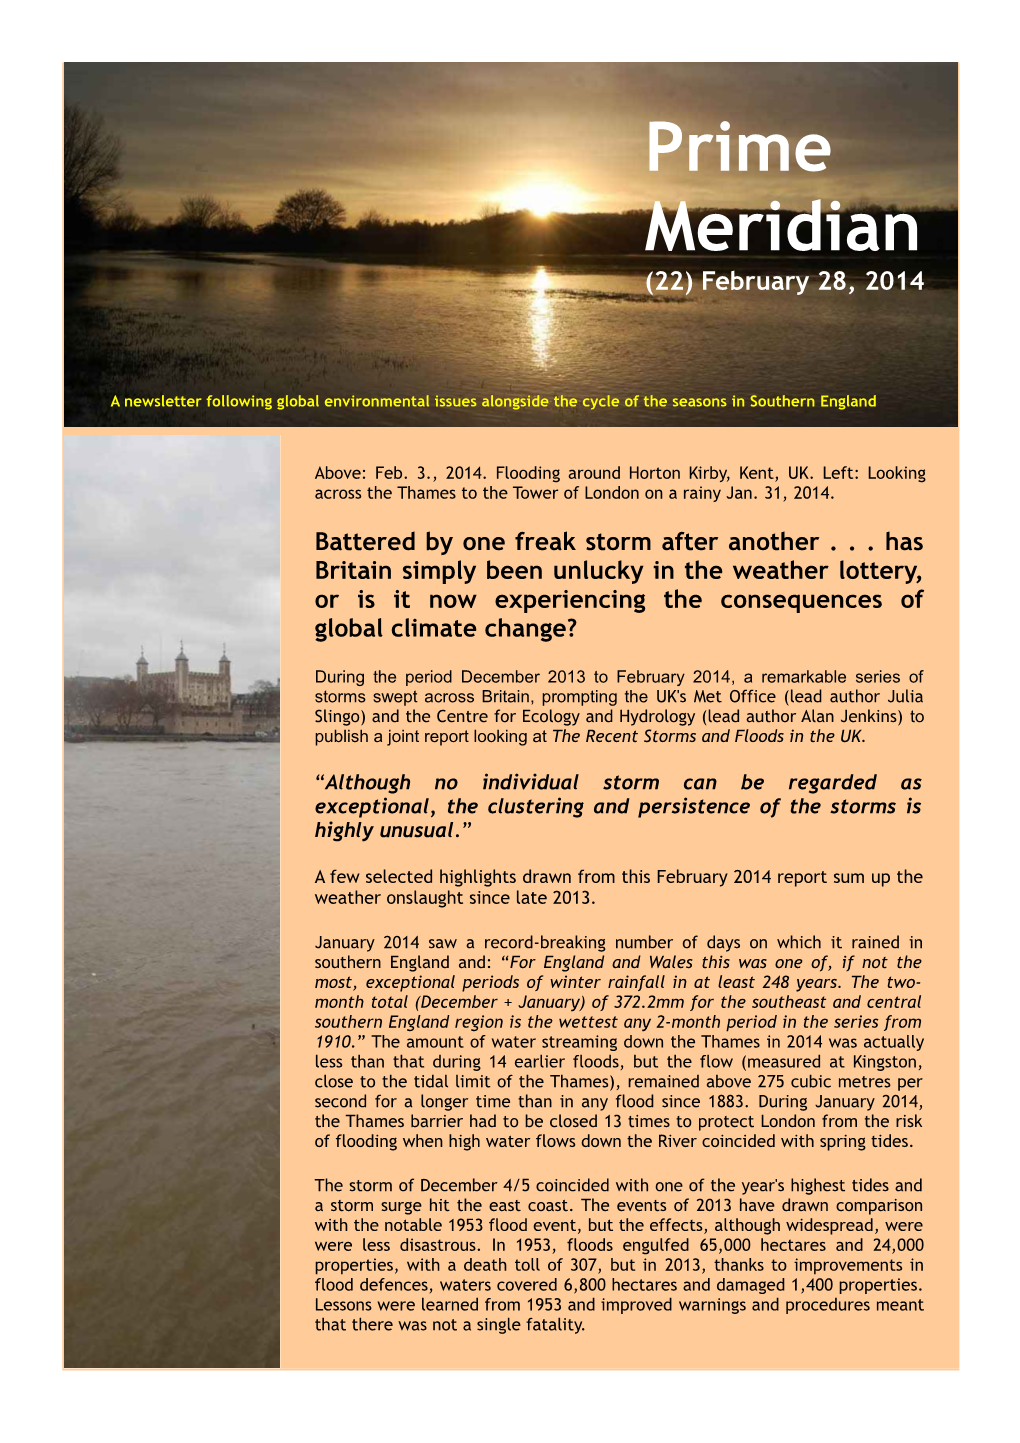 Prime Meridian (22) February 28, 2014